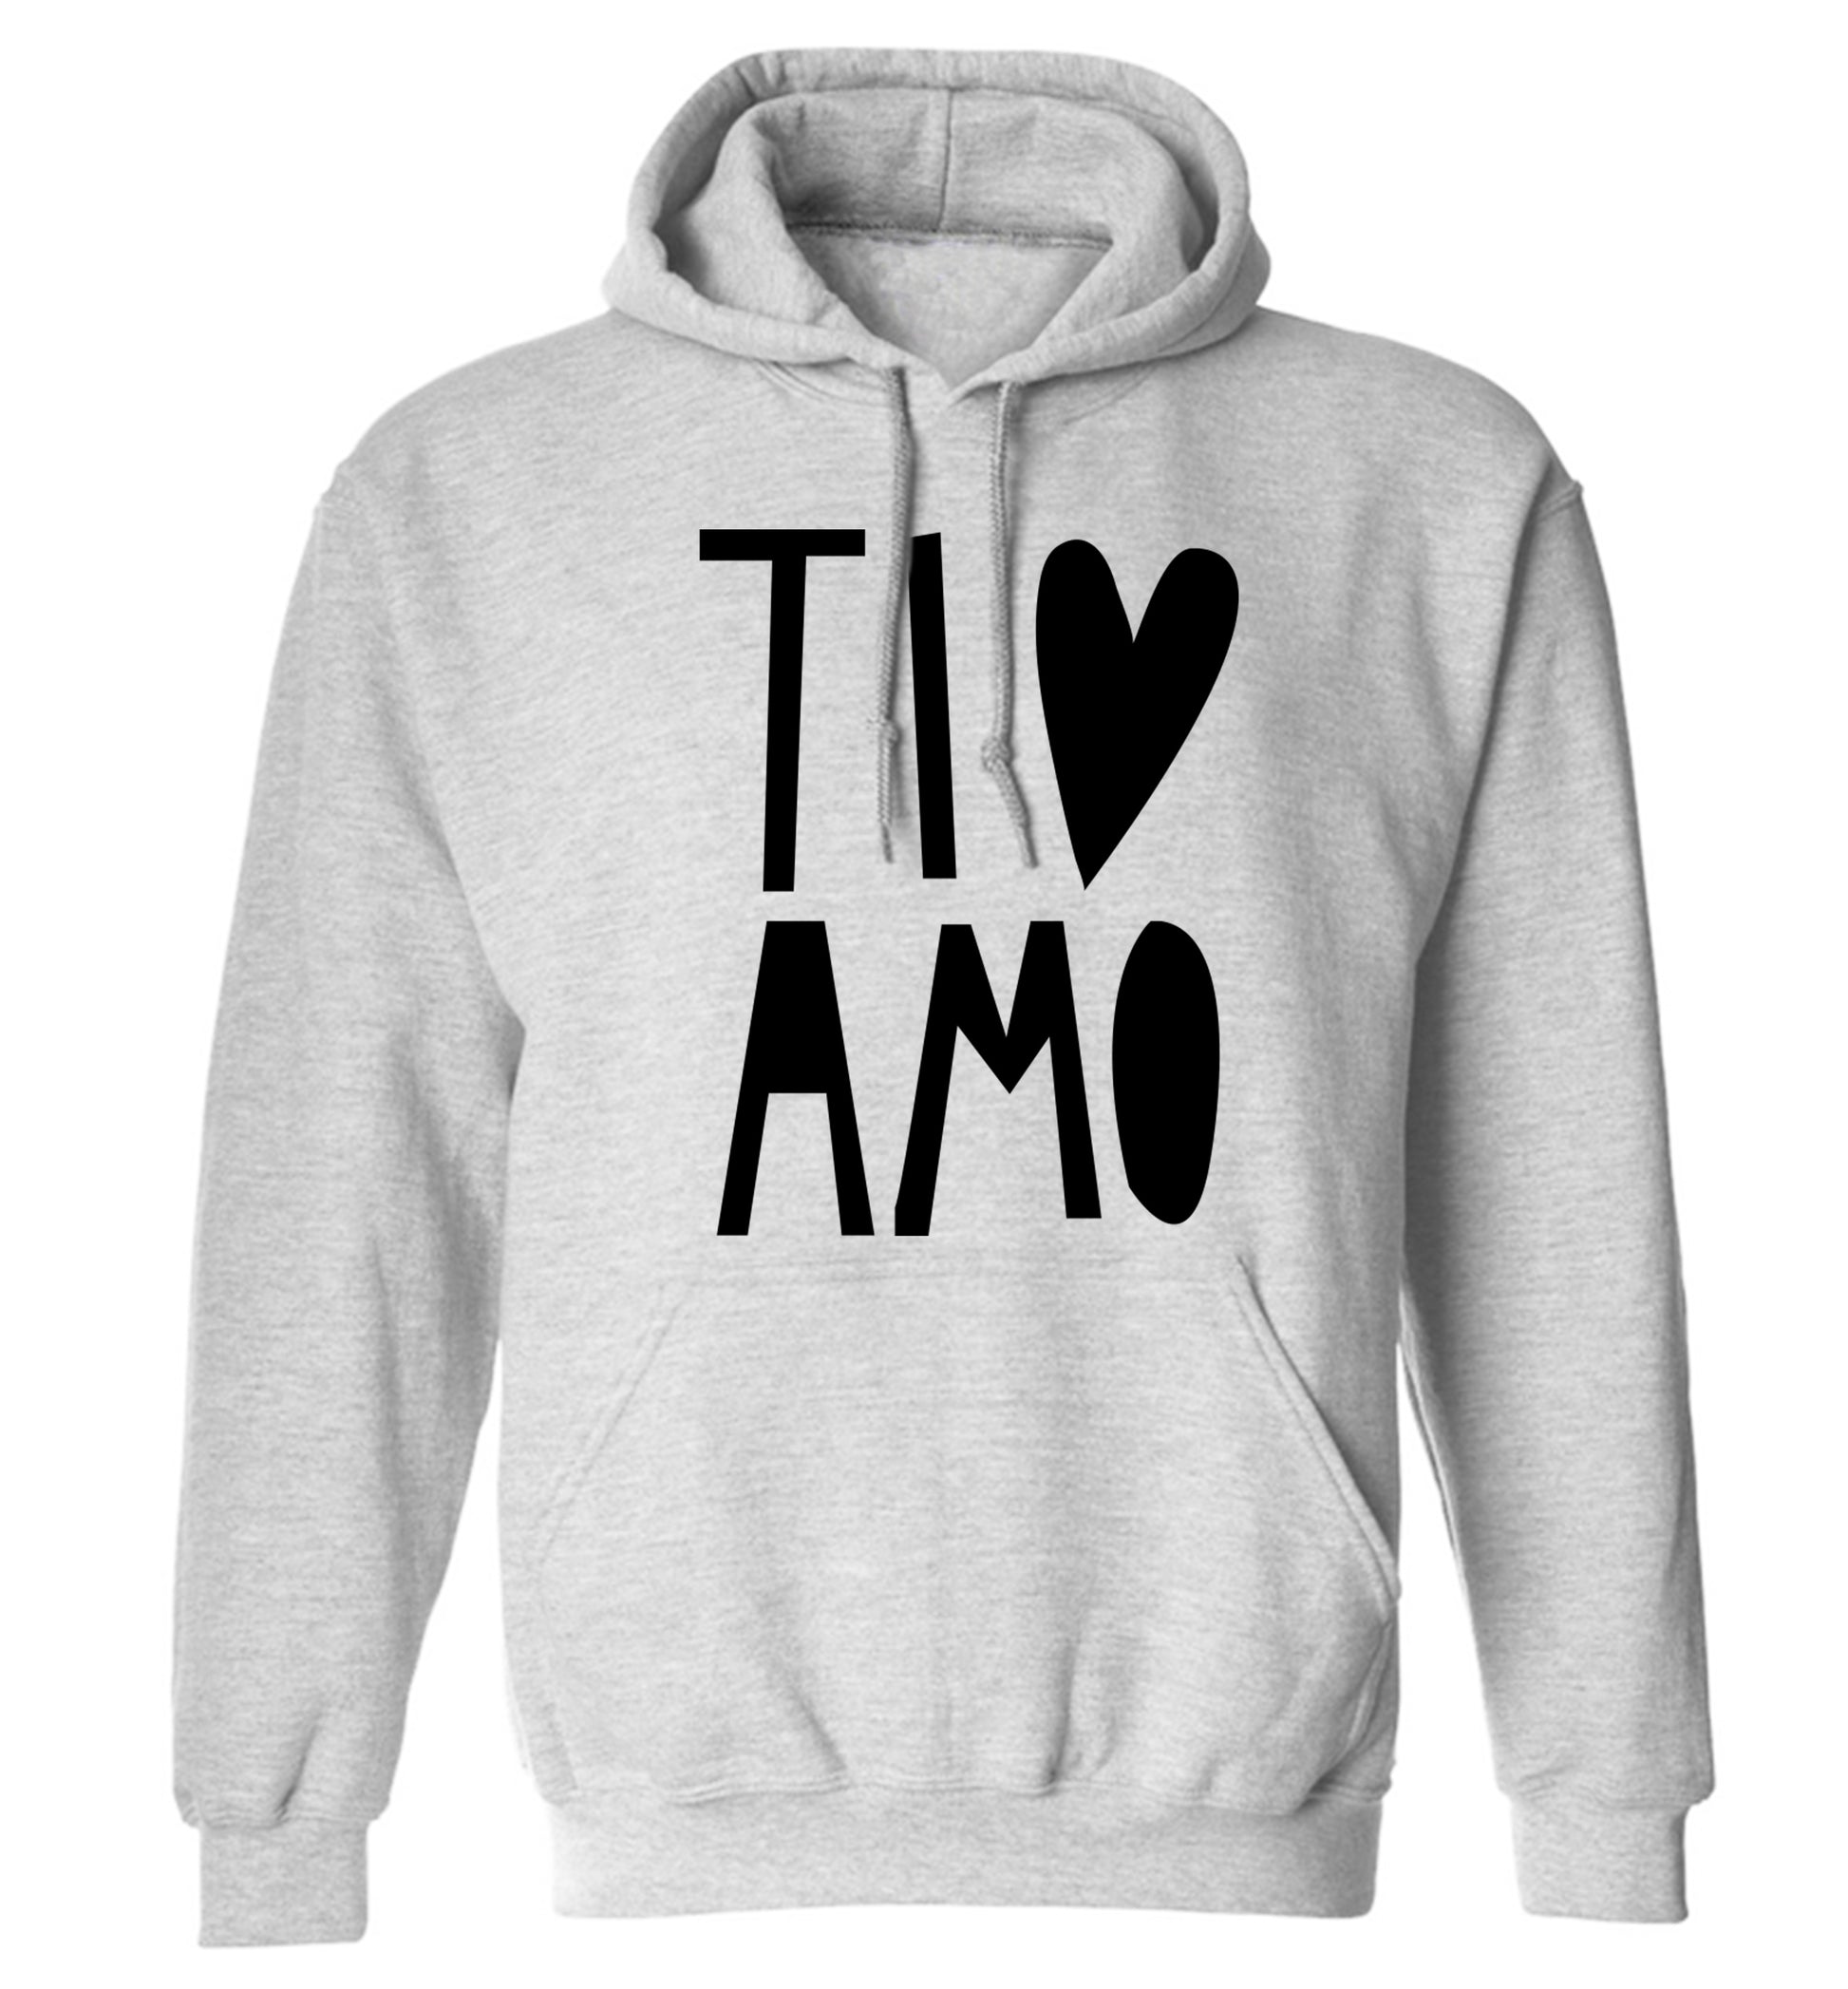 Ti amo - I love you adults unisex grey hoodie 2XL